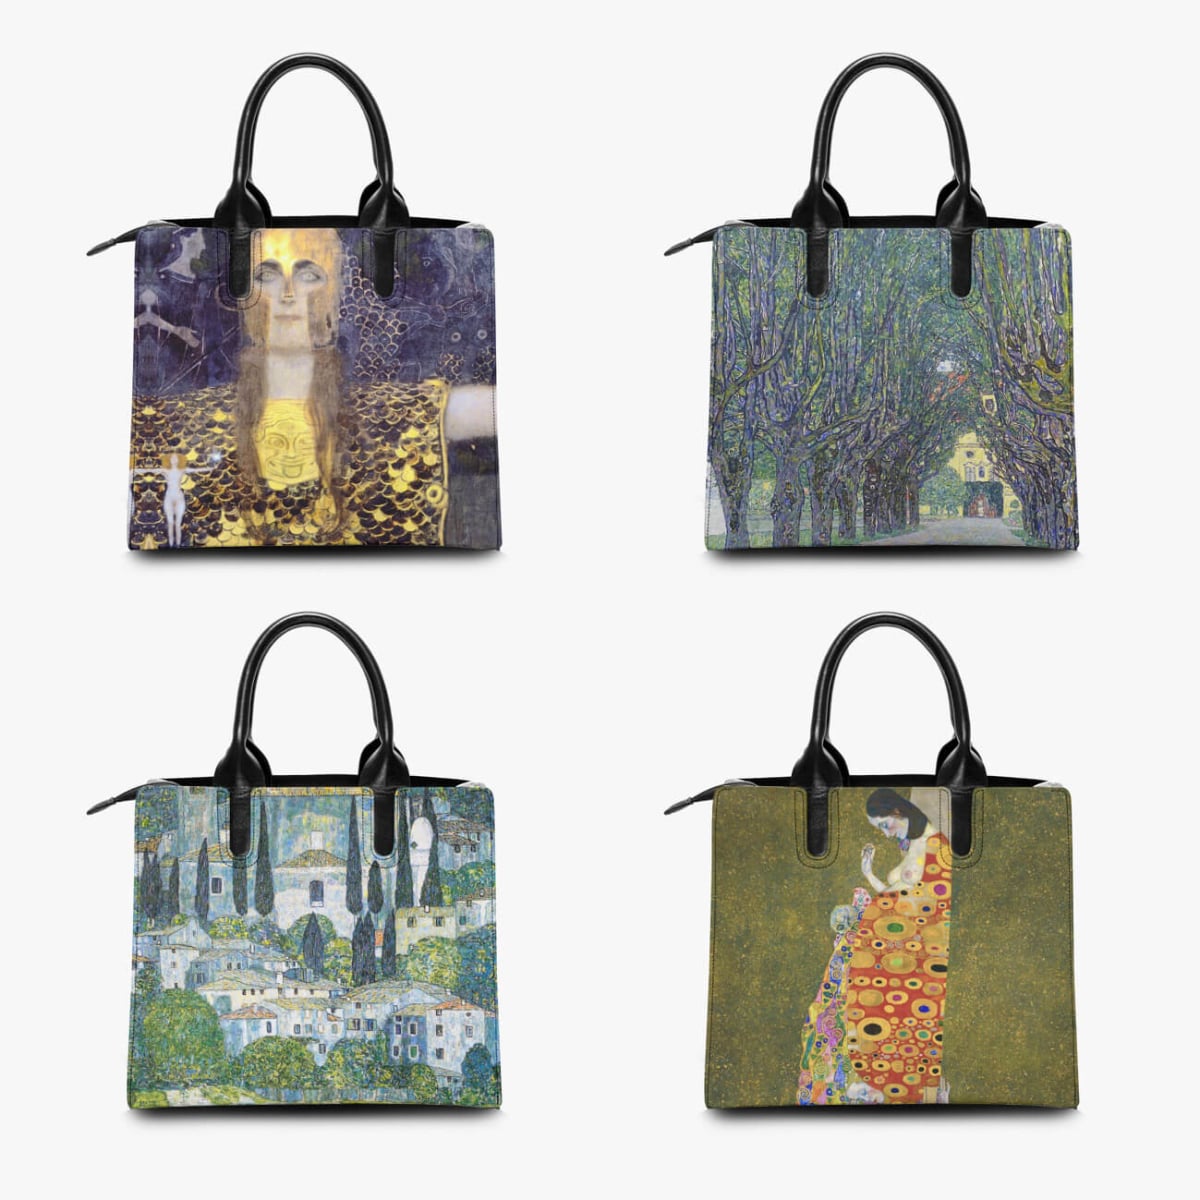 Death and Life by Gustav Klimt Art Fashion Handbag